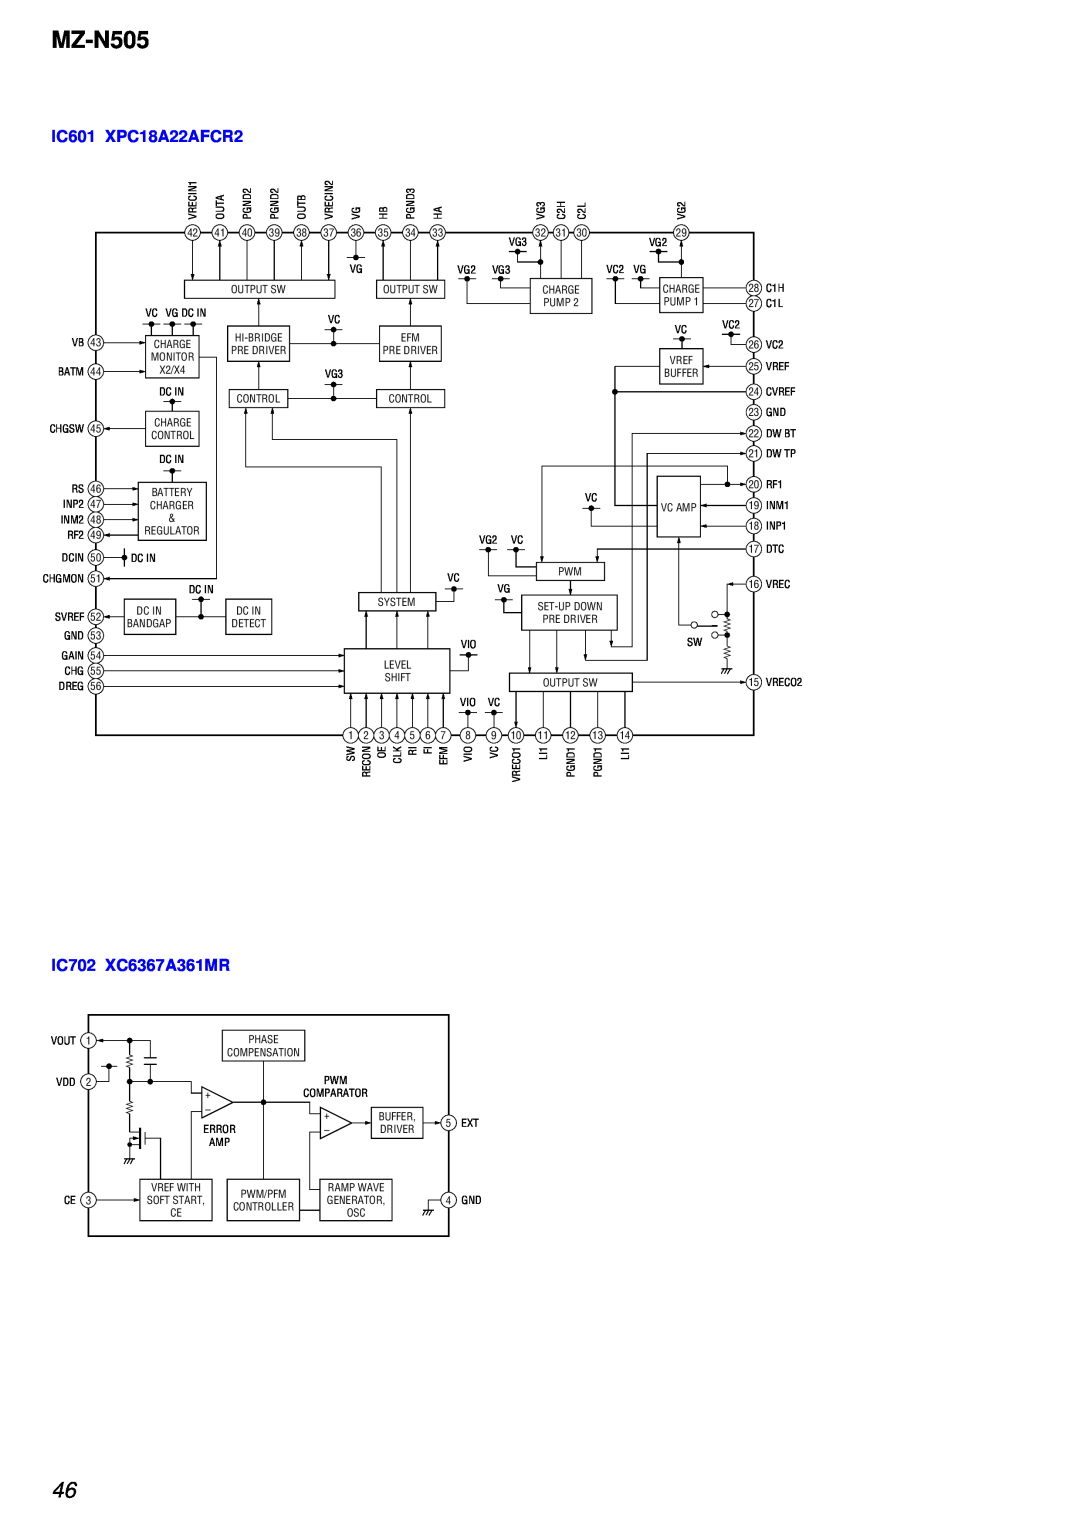 Sony MZ-N505 service manual IC601 XPC18A22AFCR2, IC702 XC6367A361MR 